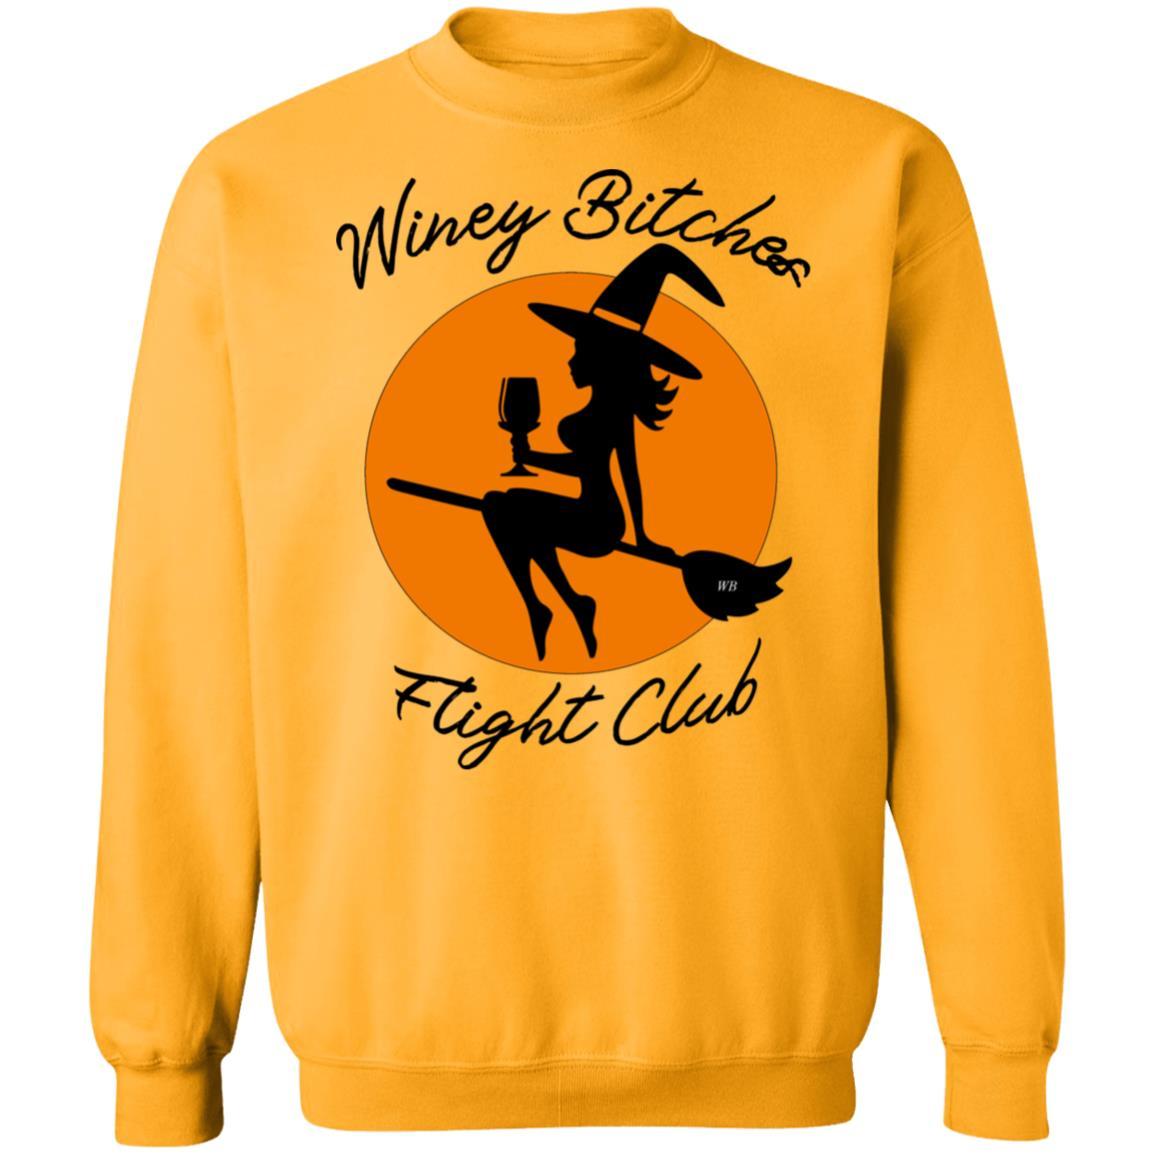 Sweatshirts Gold / S WineyBitches.Co "Winey Bitches Flight Club"Crewneck Pullover Sweatshirt  8 oz. WineyBitchesCo